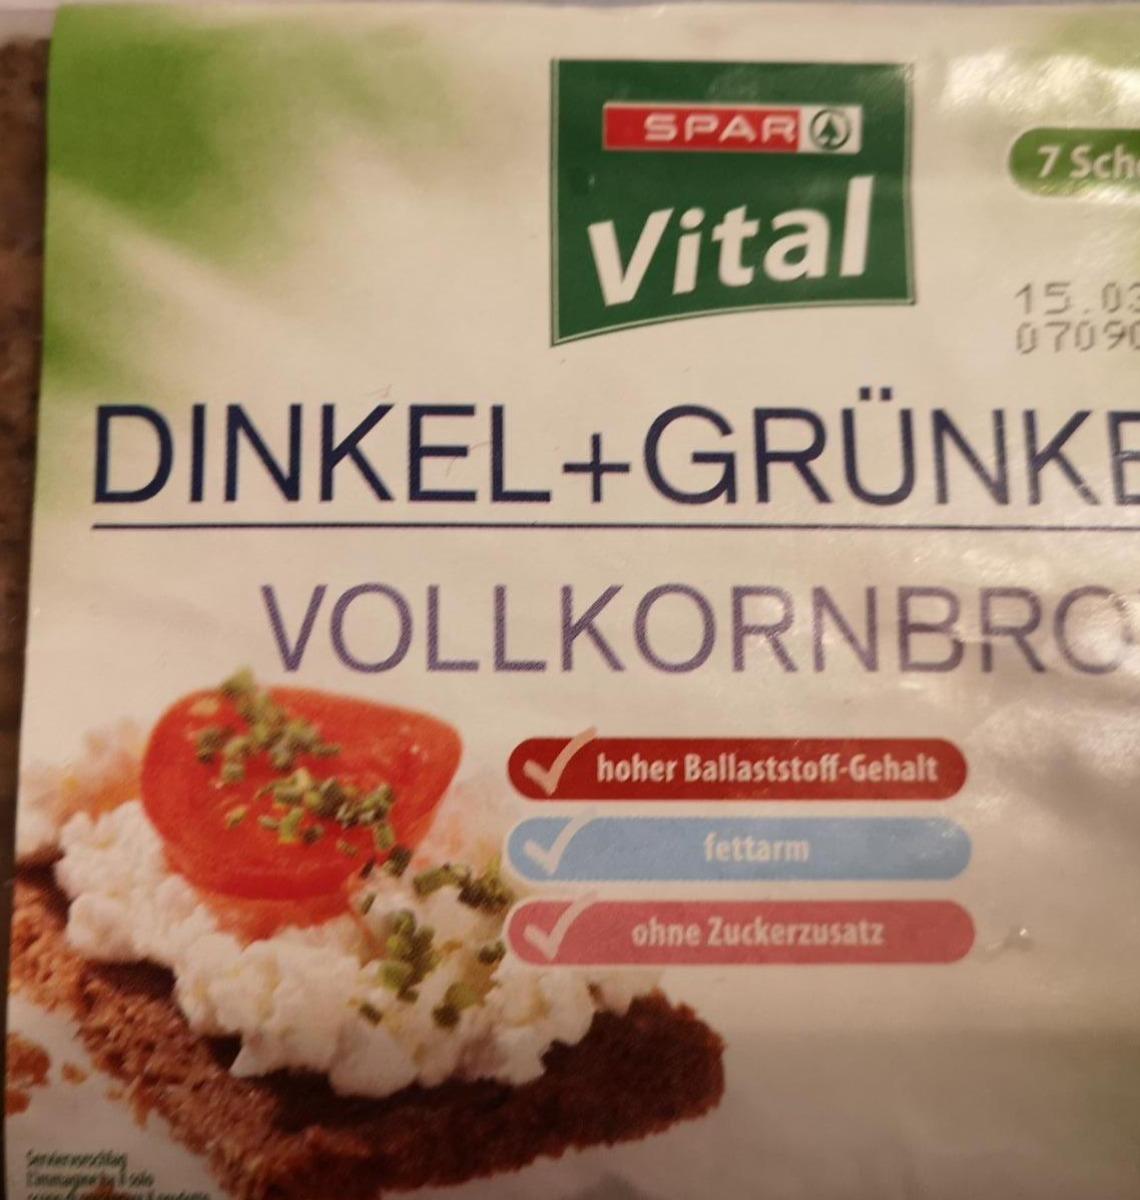 Fotografie - Dinkel+Grünkern Vollkornbrot Spar Vital